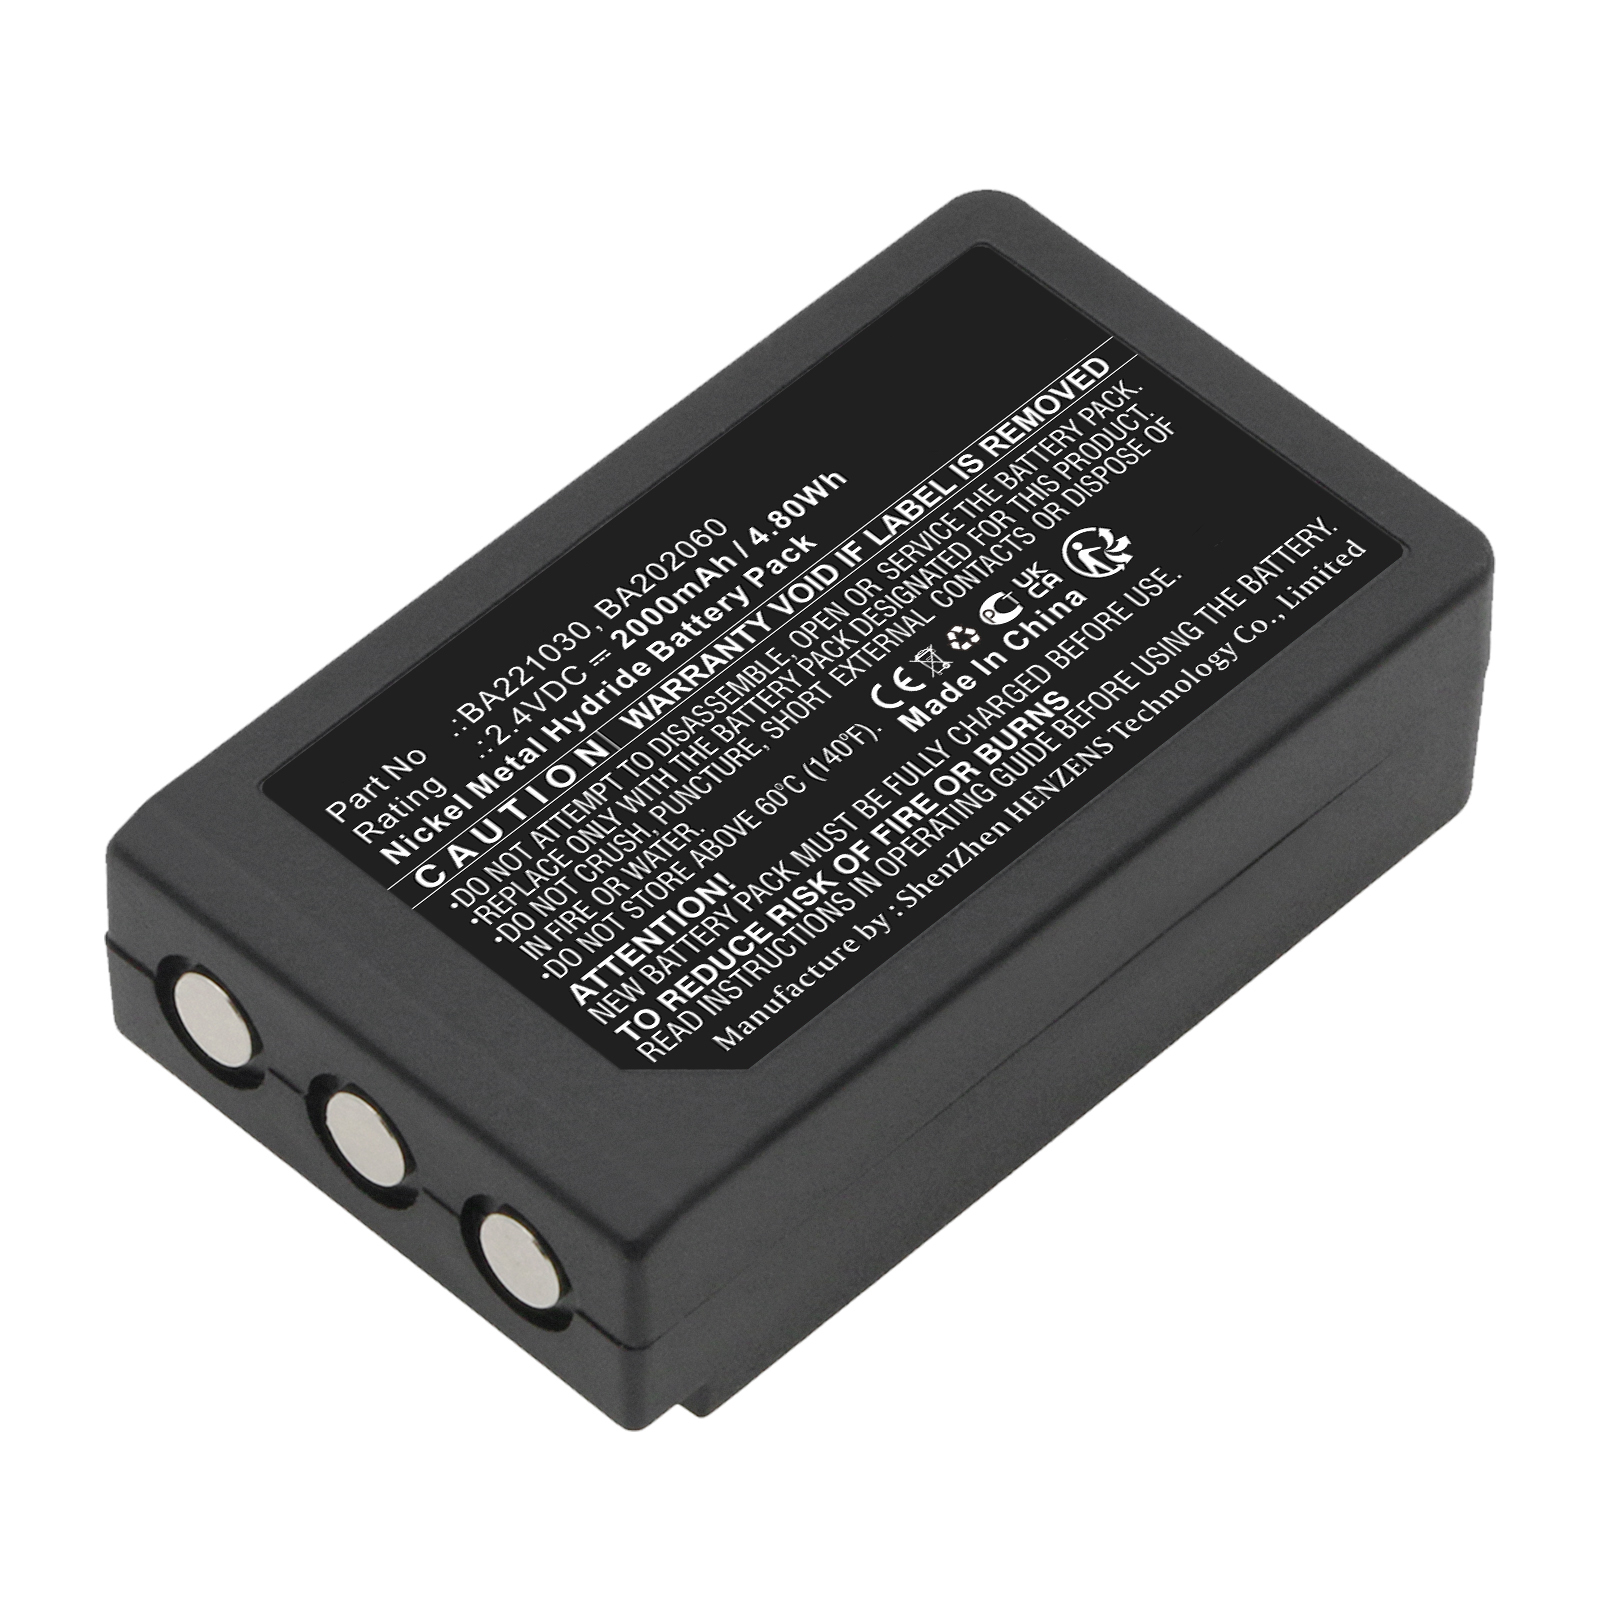 Synergy Digital Remote Control Battery, Compatible with HBC BA202060 Remote Control Battery (Ni-MH, 2.4V, 2000mAh)